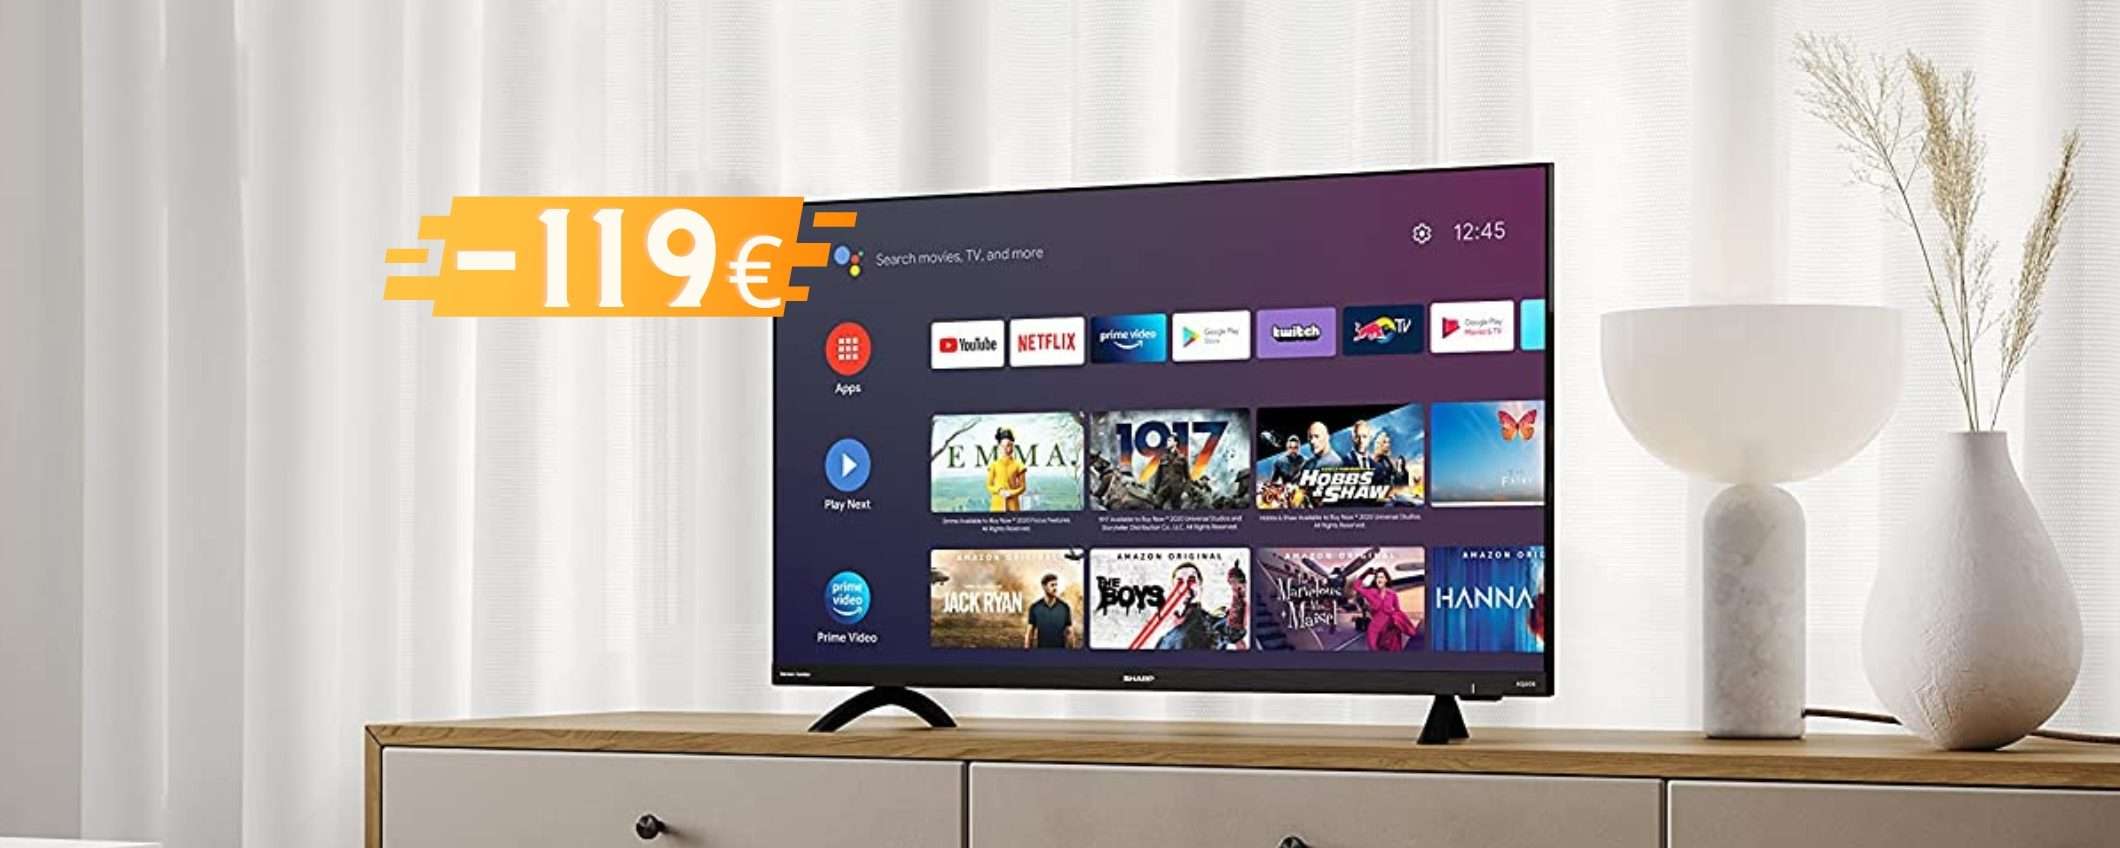 Sharp Aquos: smart TV da 32 pollici a 119€ in MENO